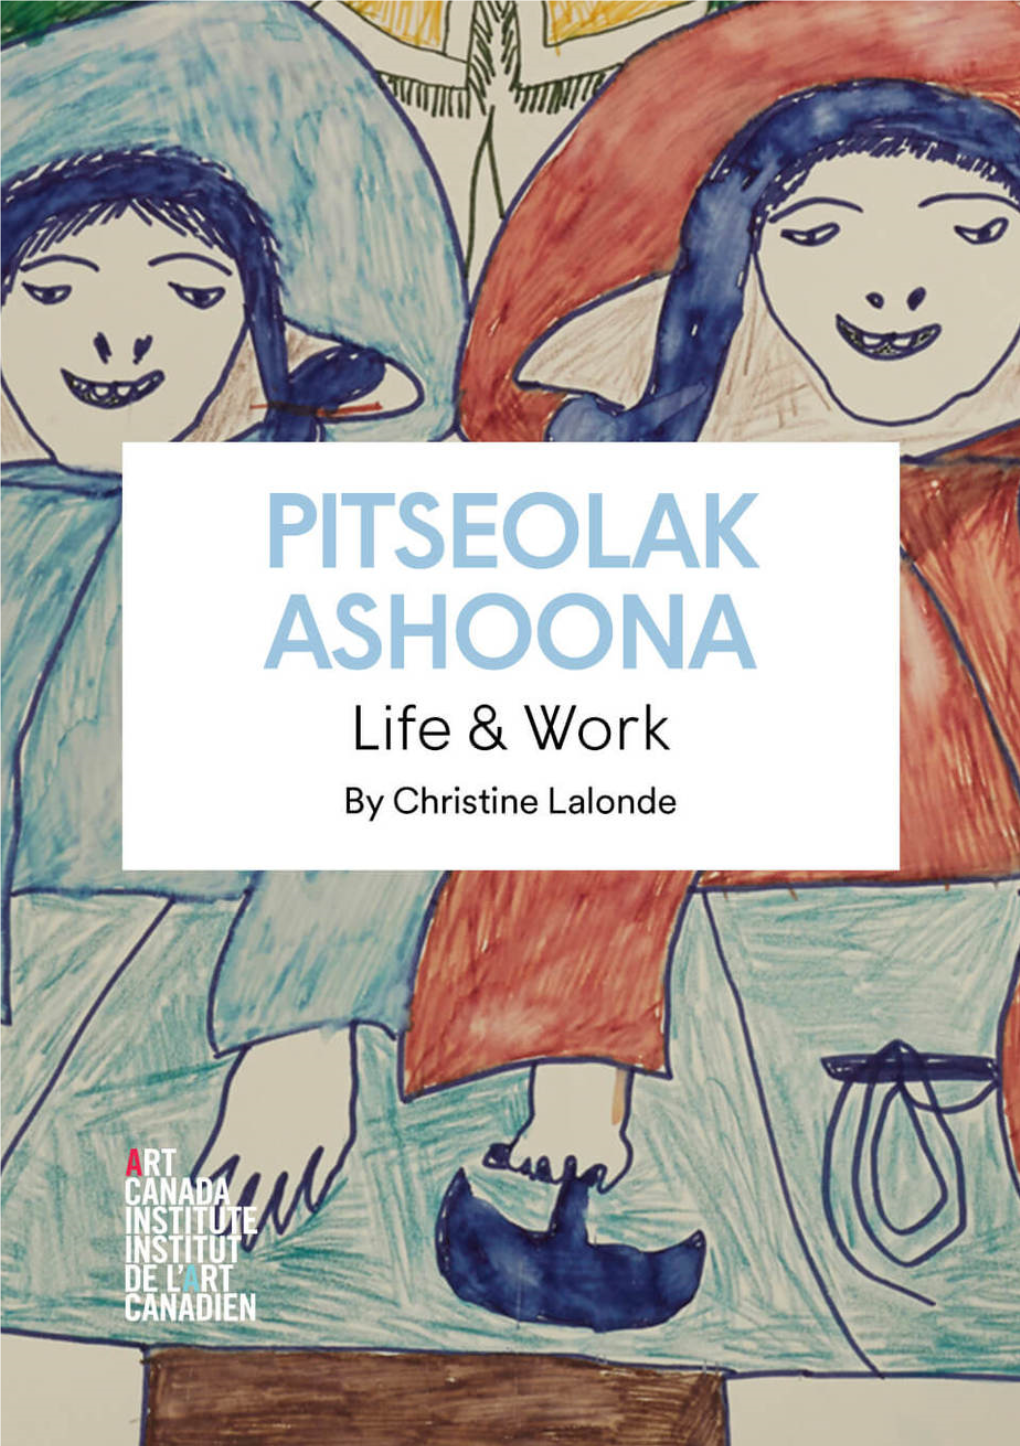 PITSEOLAK ASHOONA Life & Work by Christine Lalonde